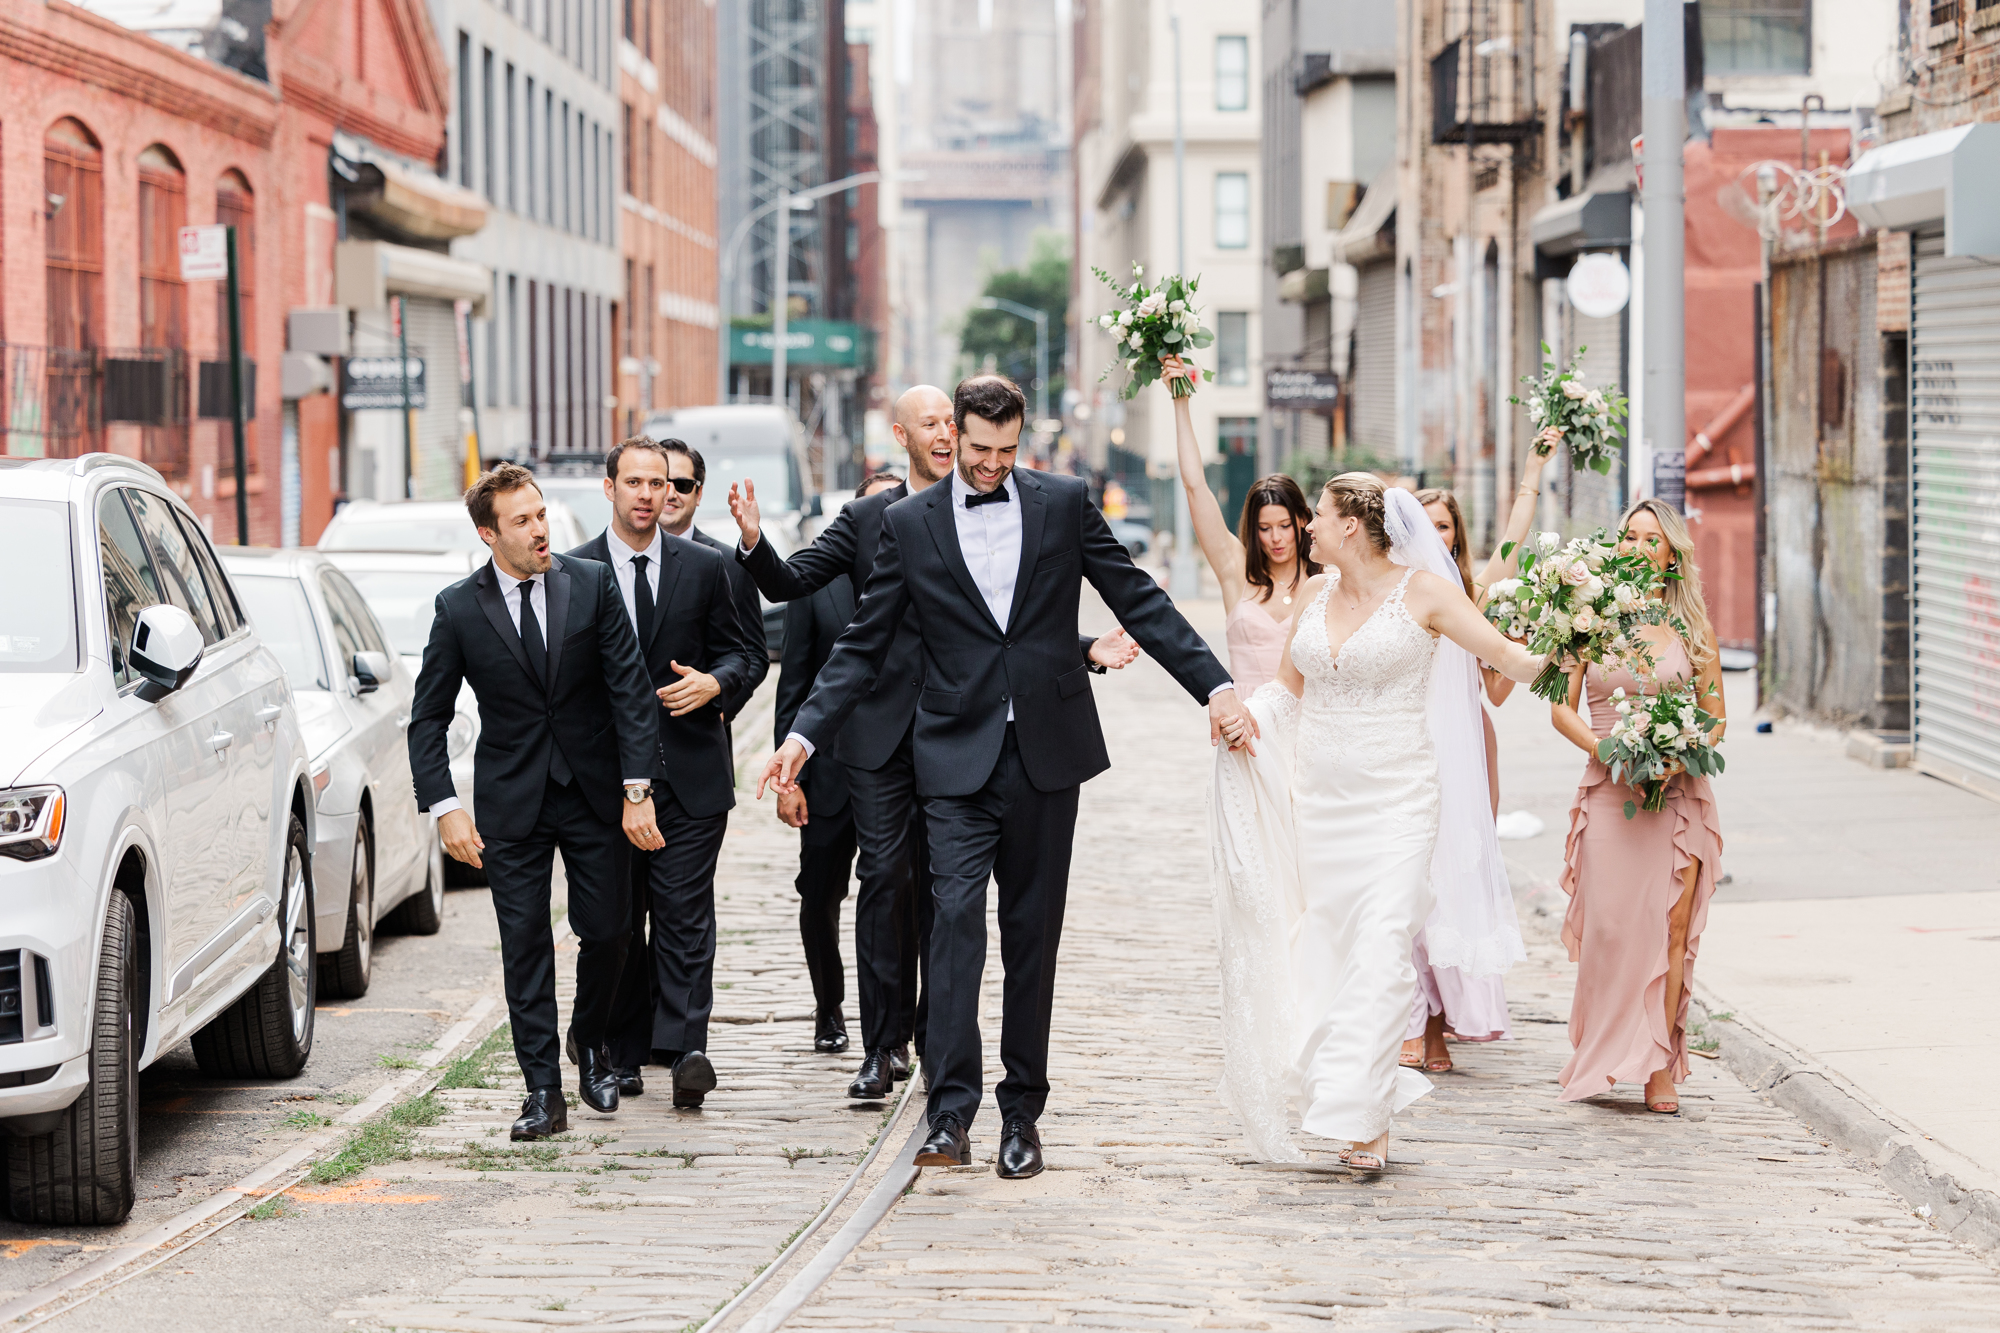 Scenic Brooklyn Wedding Photos at Bridgepoint Featuring the New York City Skyline 